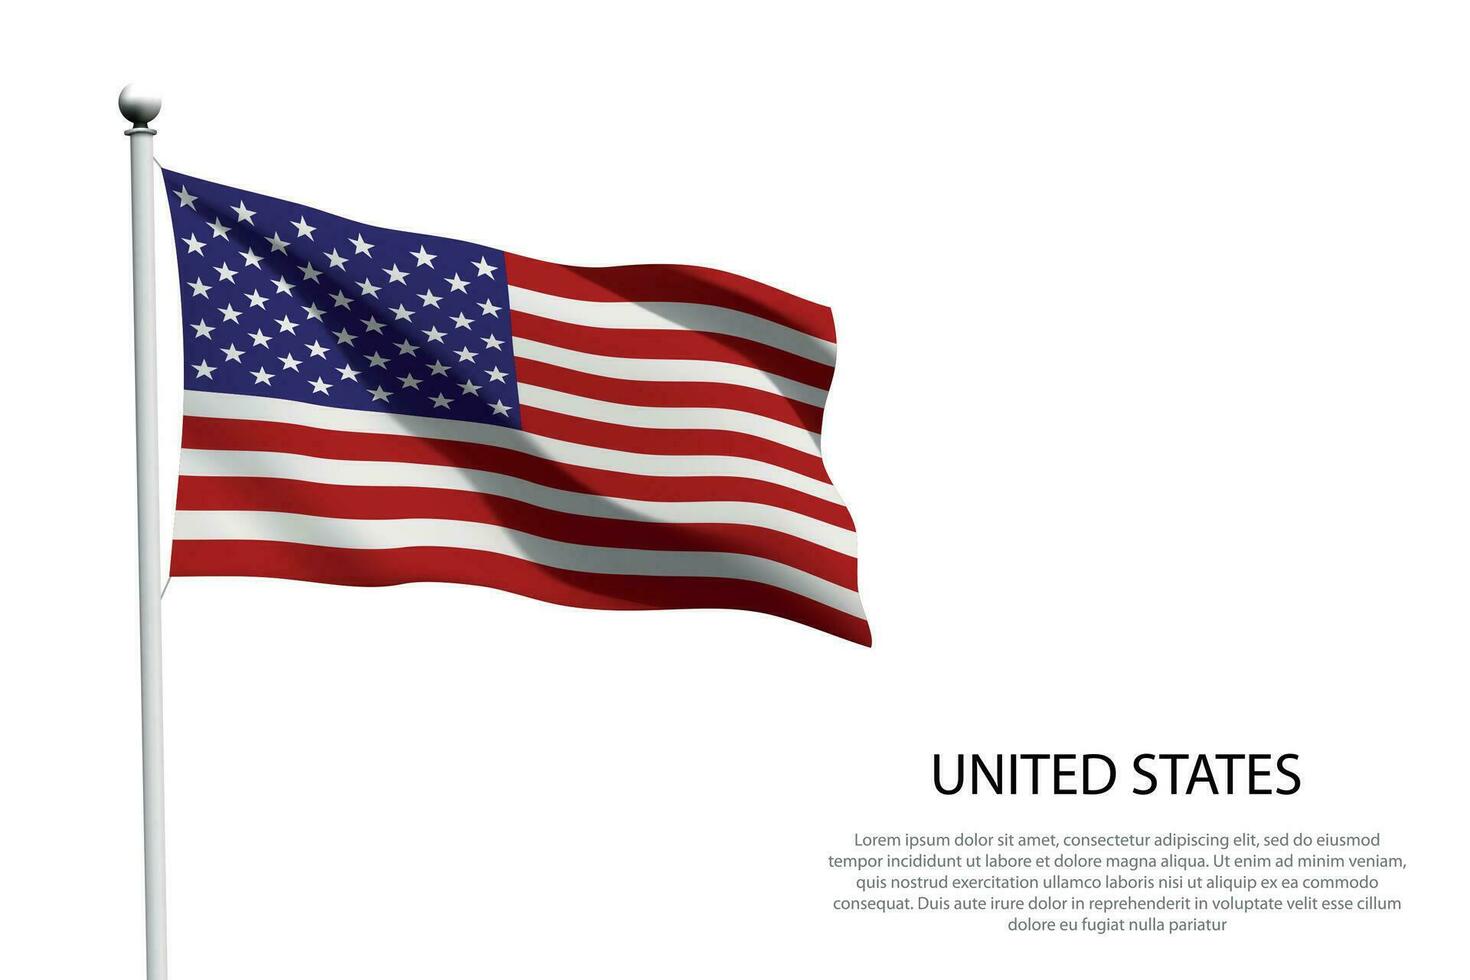 National flag United States waving on white background vector